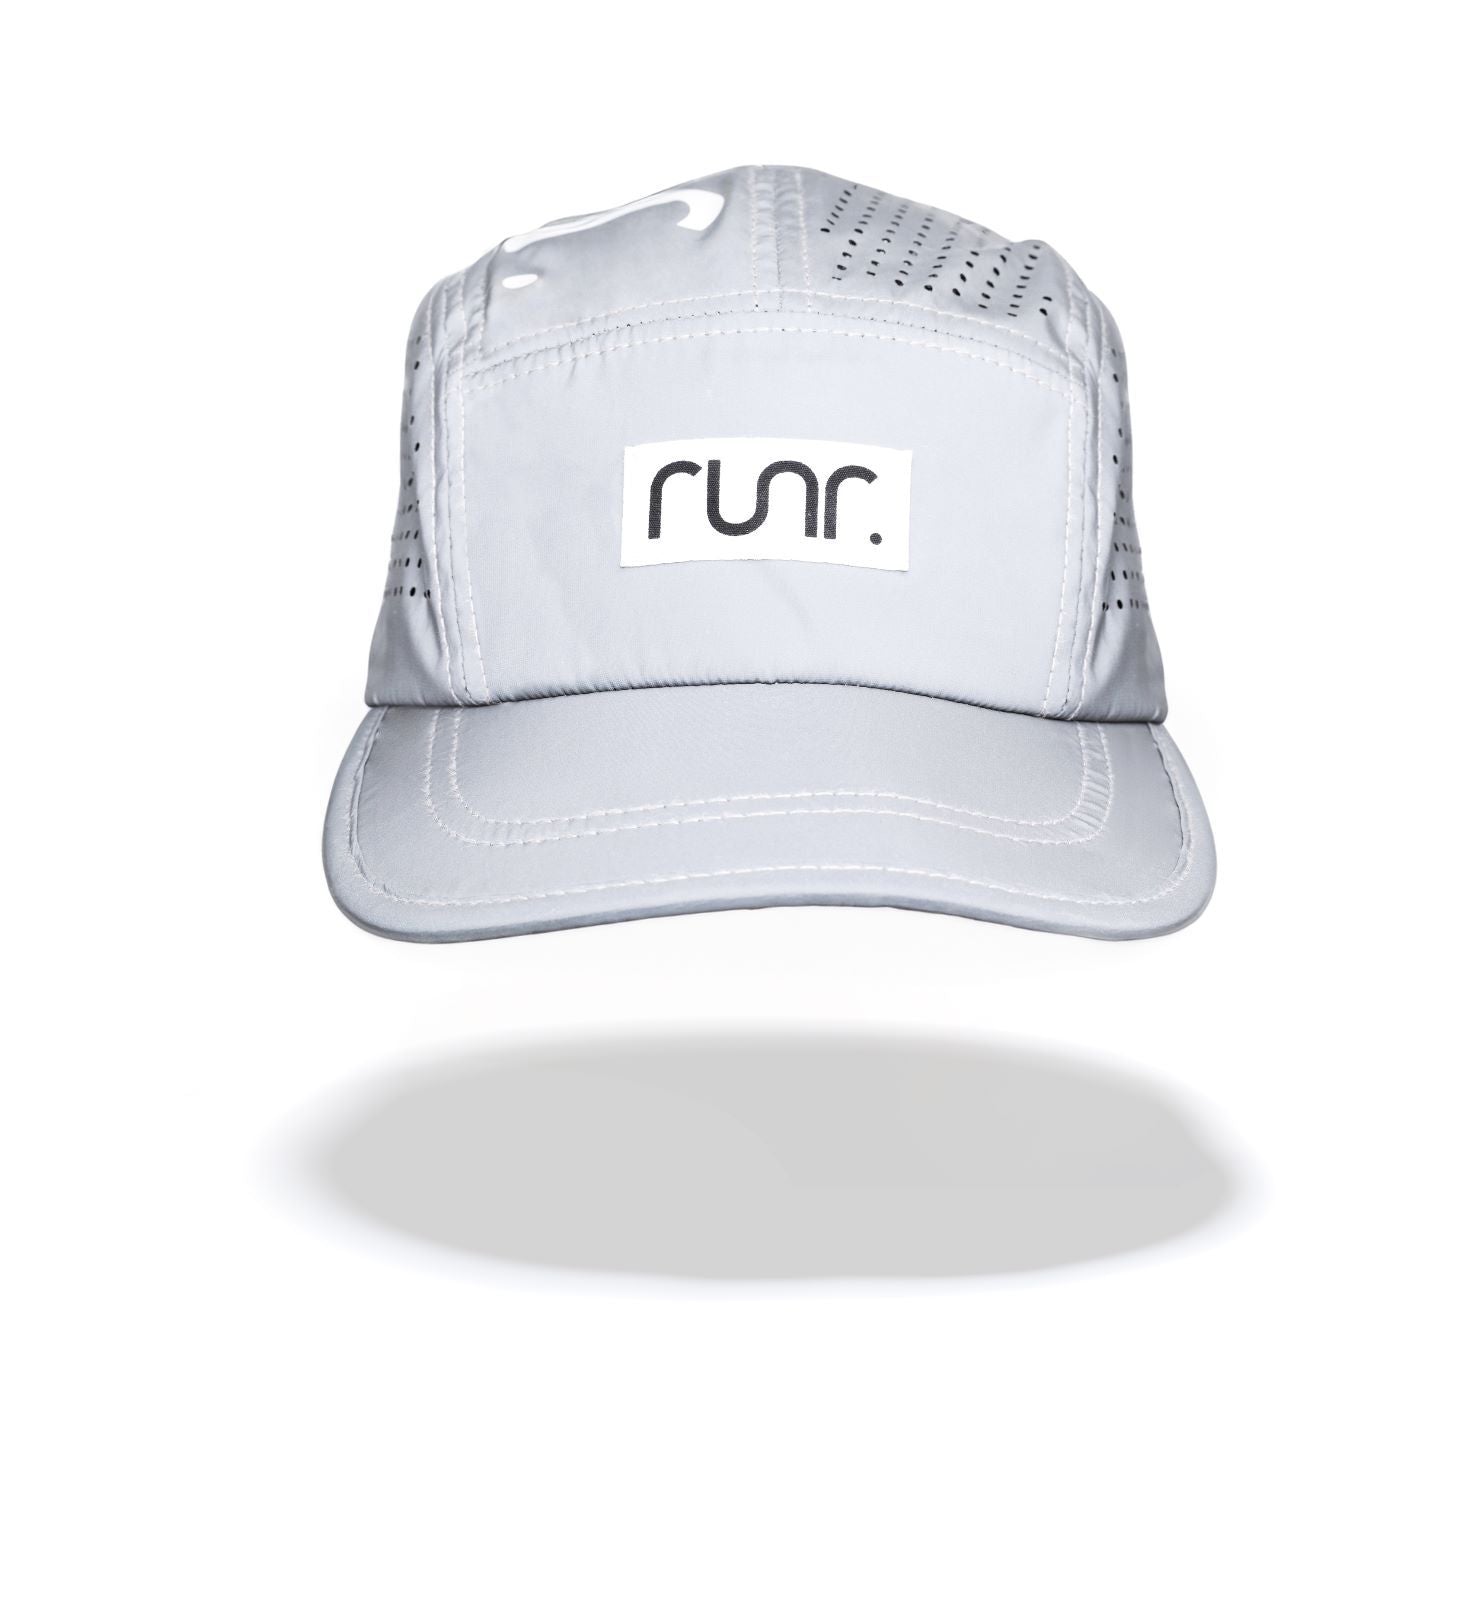 Runr Lumos Technical Running Hat (Reflective) - Sole Mate